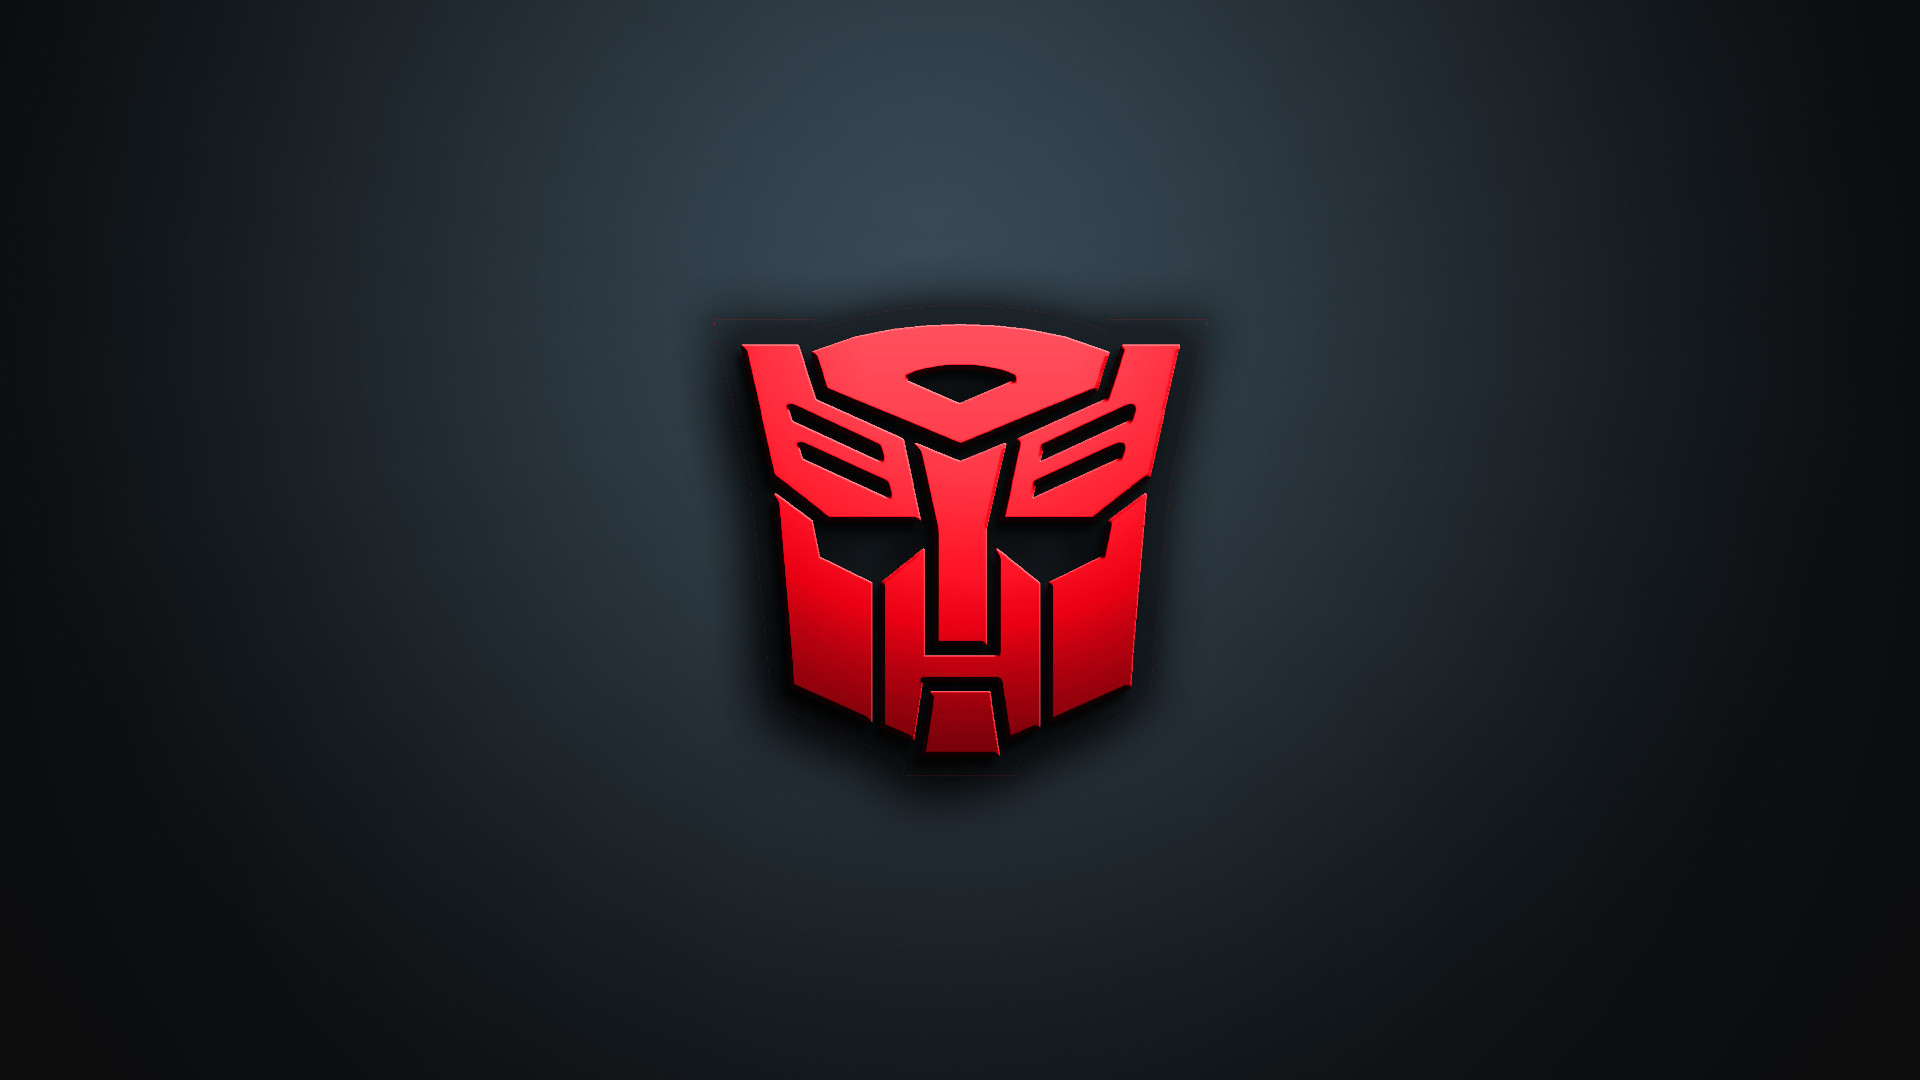 red autobot symbol